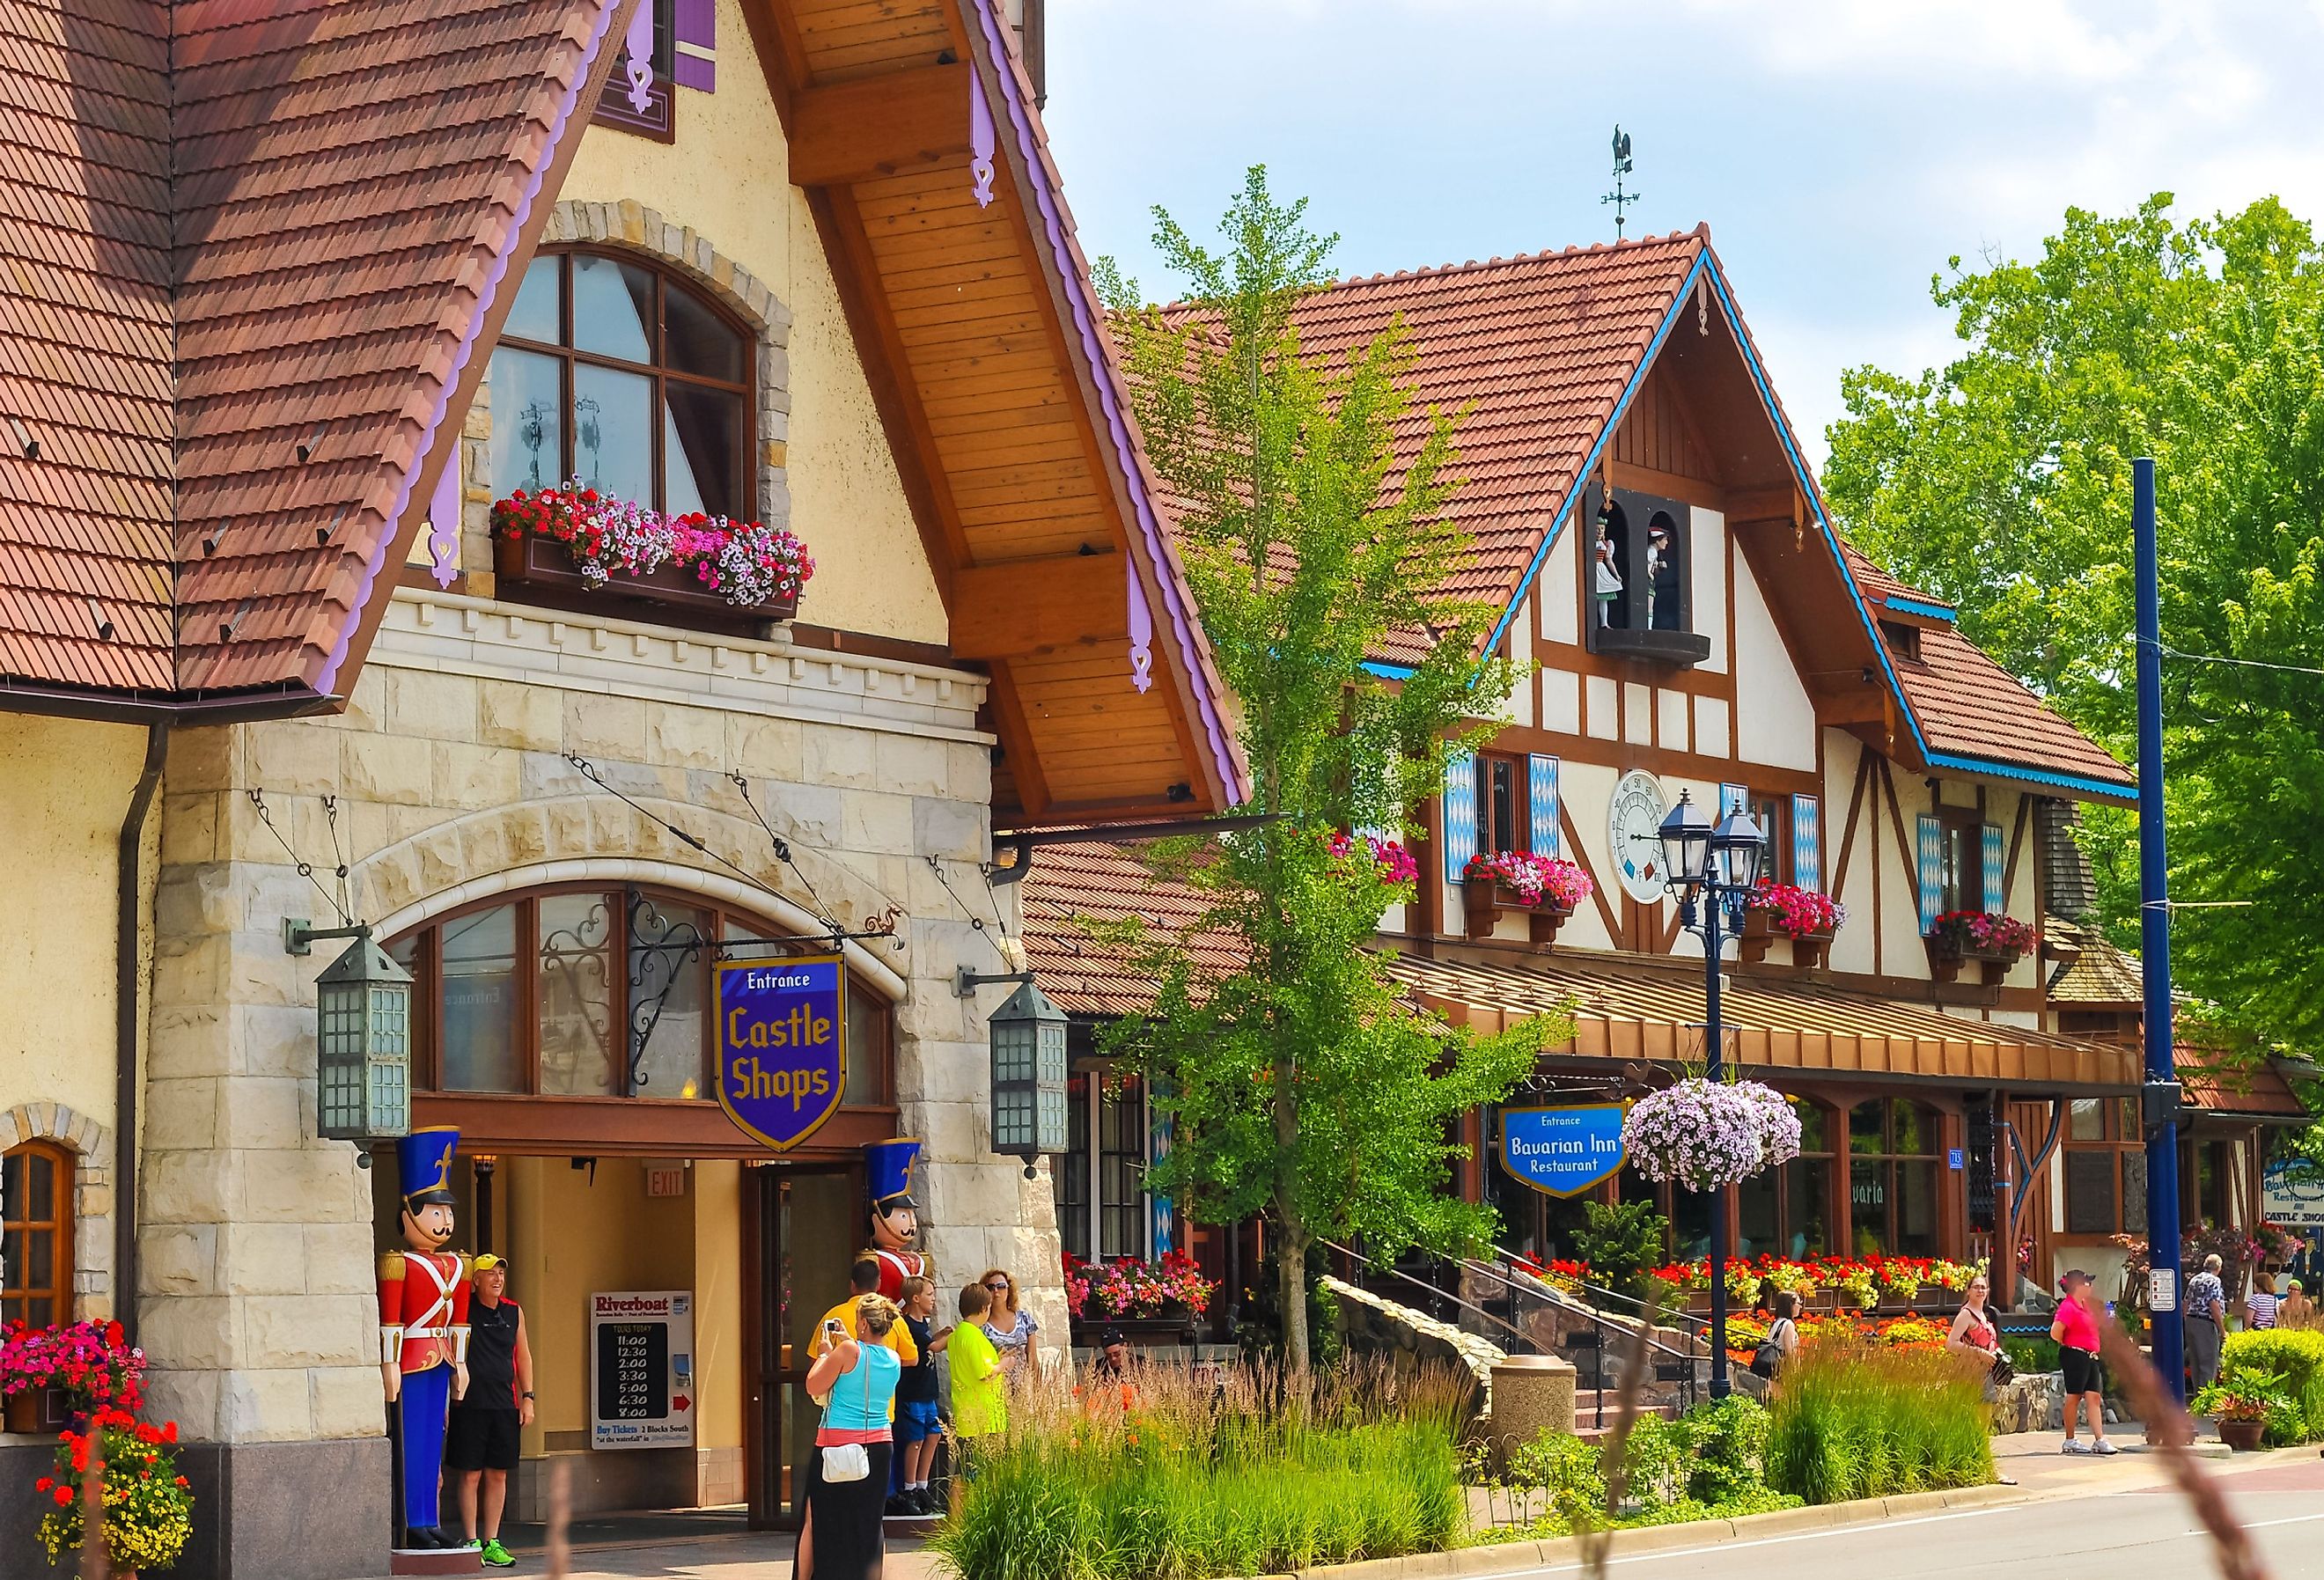 Bavarian Inn in Frankenmuth, Michigan. Image credit Kenneth Sponsler via Shutterstock.com